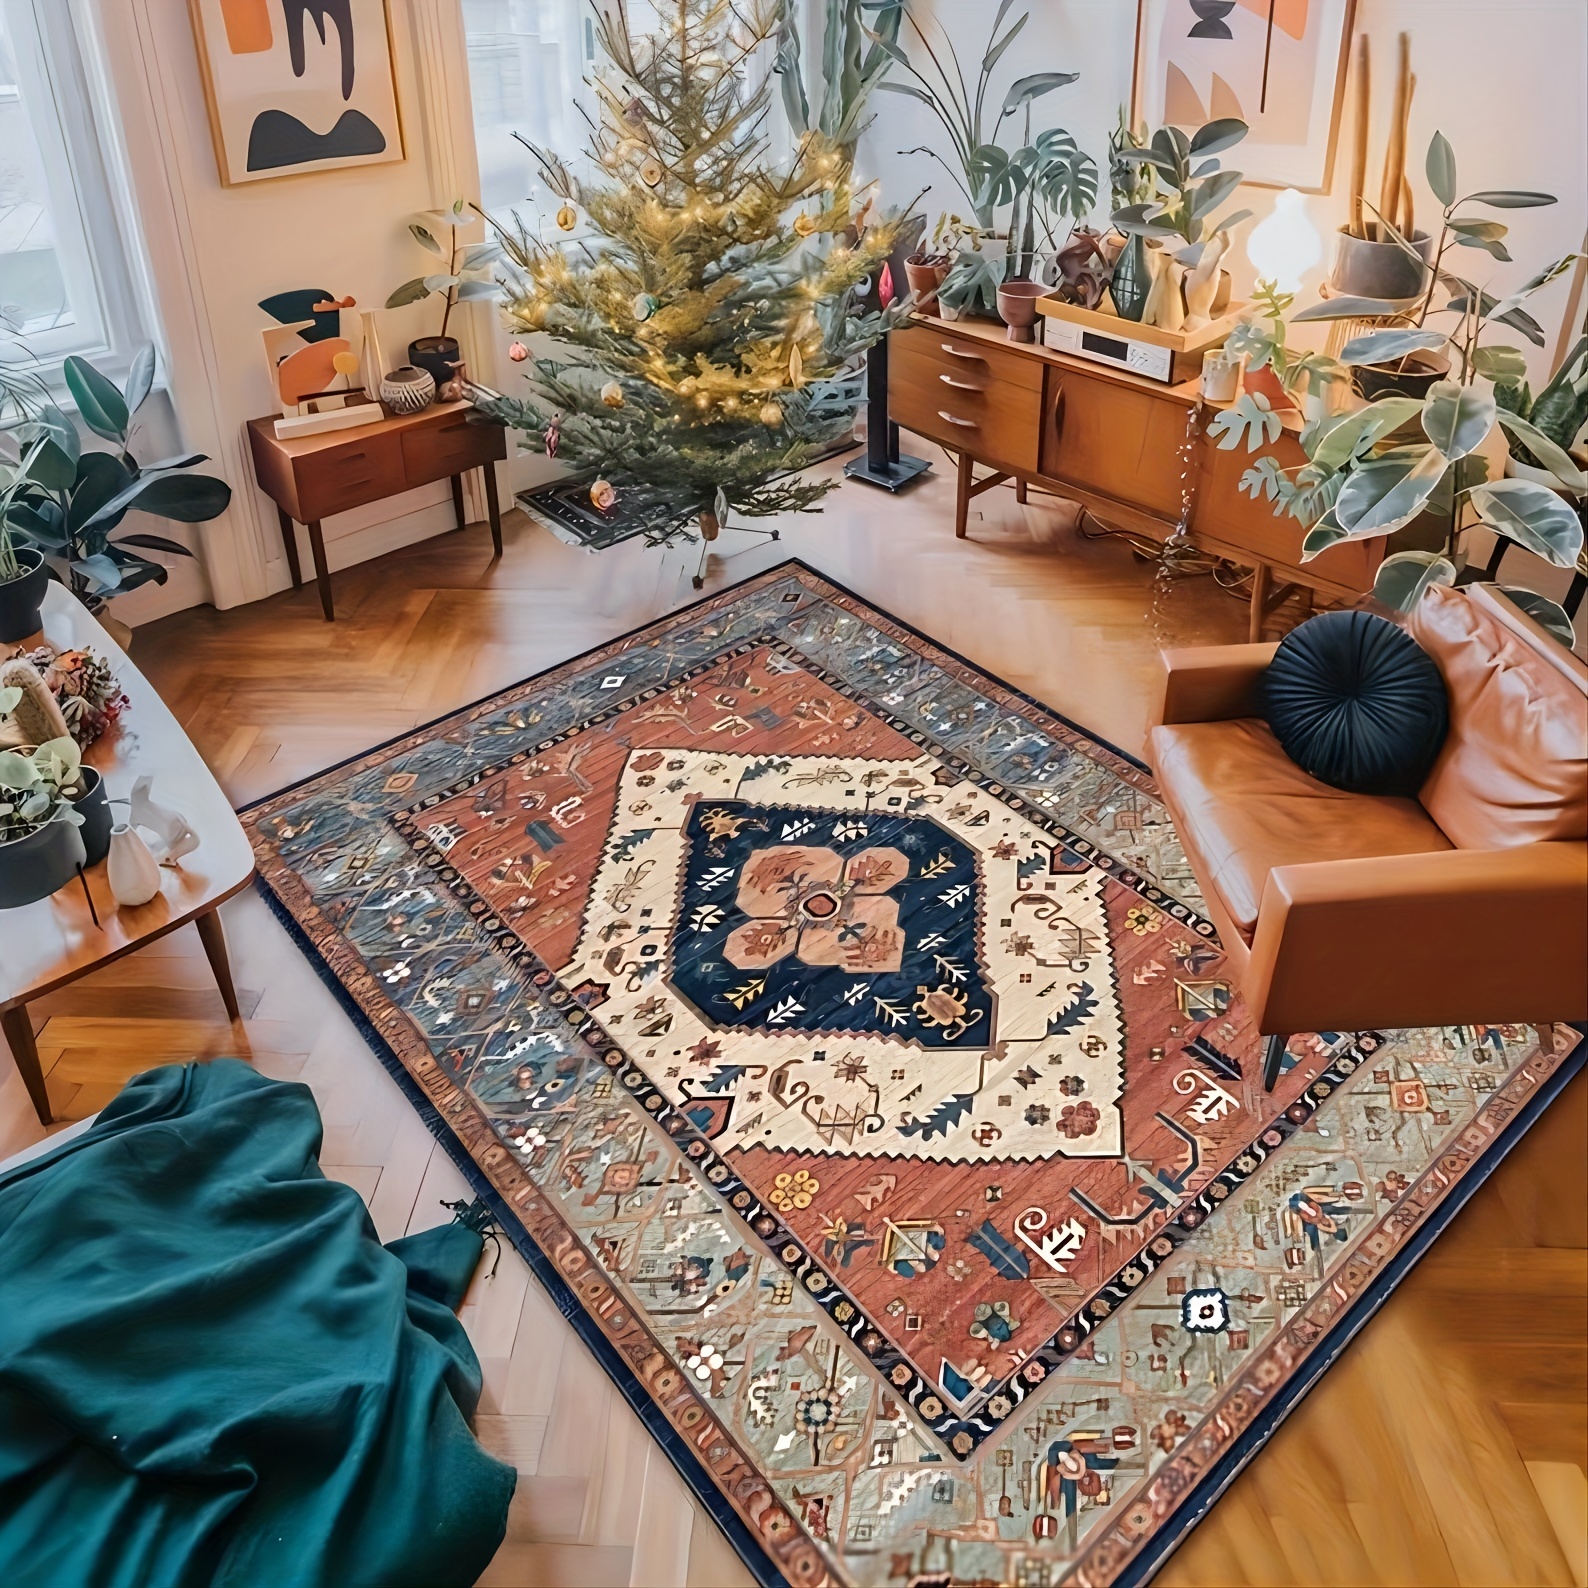 Premium Vintage Boho Area Rug For Living Room, Luxury Traditional